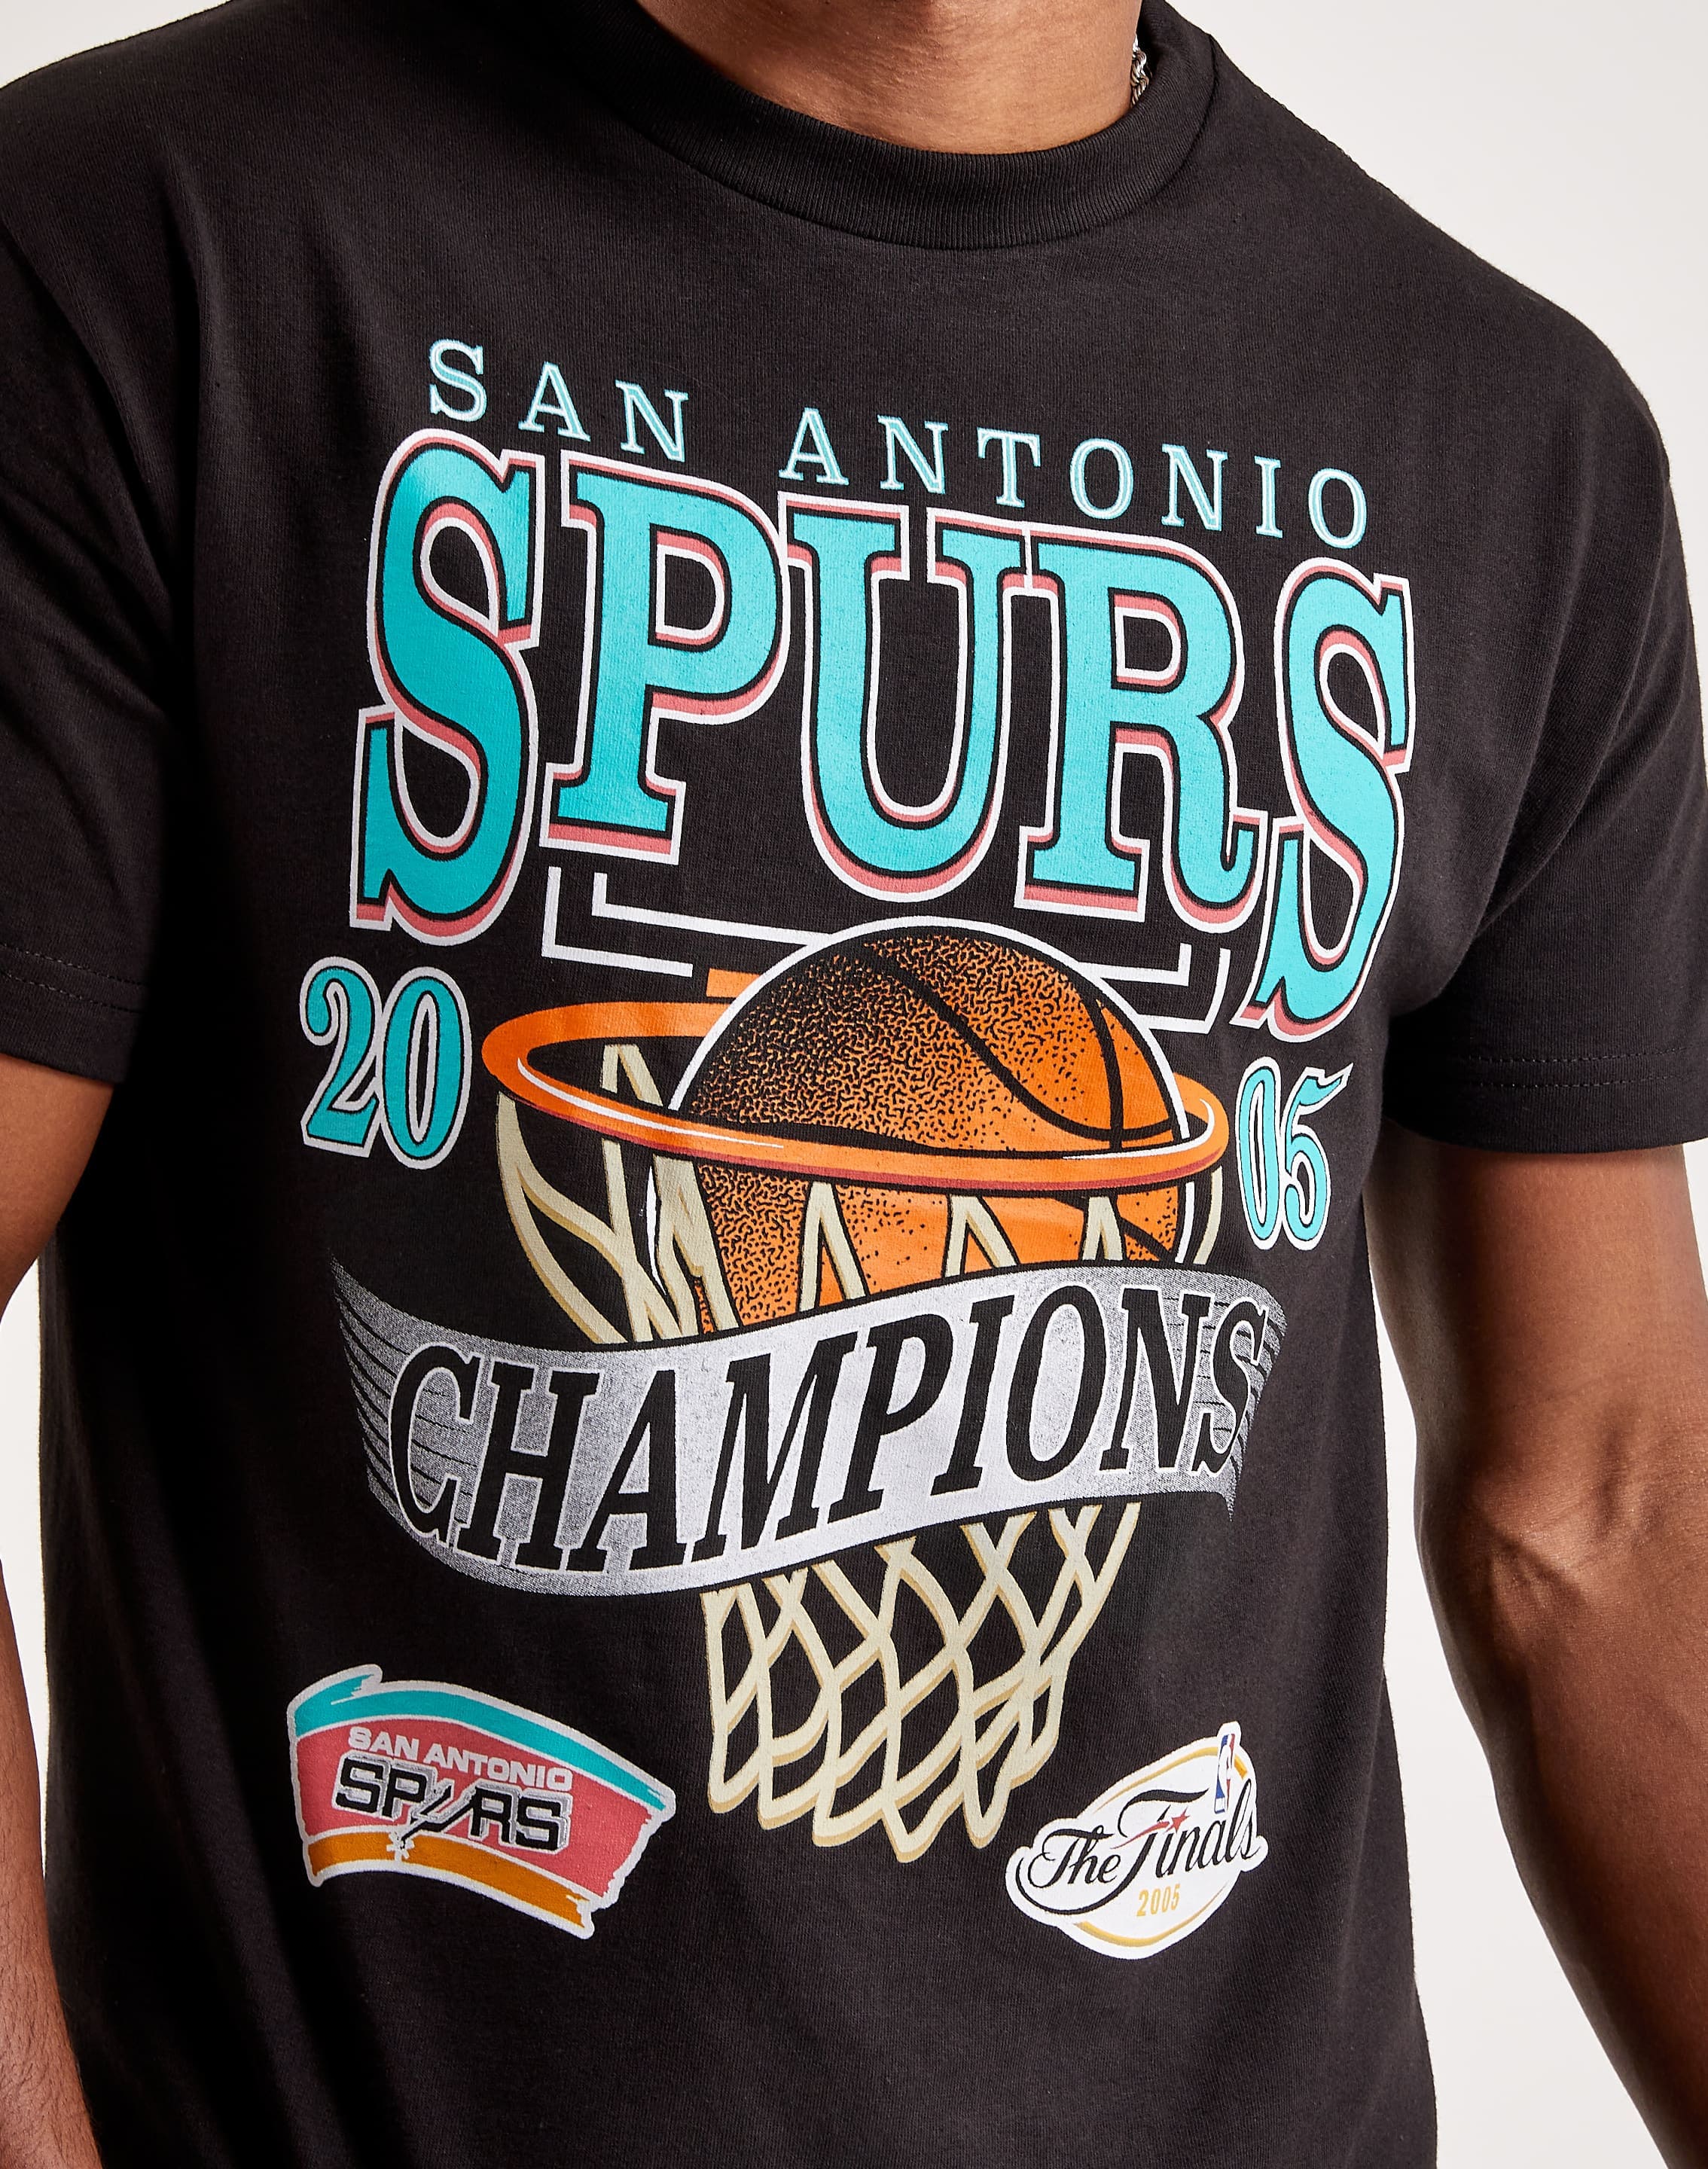 San Antonio Spurs Mens Apparel & Gifts, Mens Spurs Clothing, Merchandise